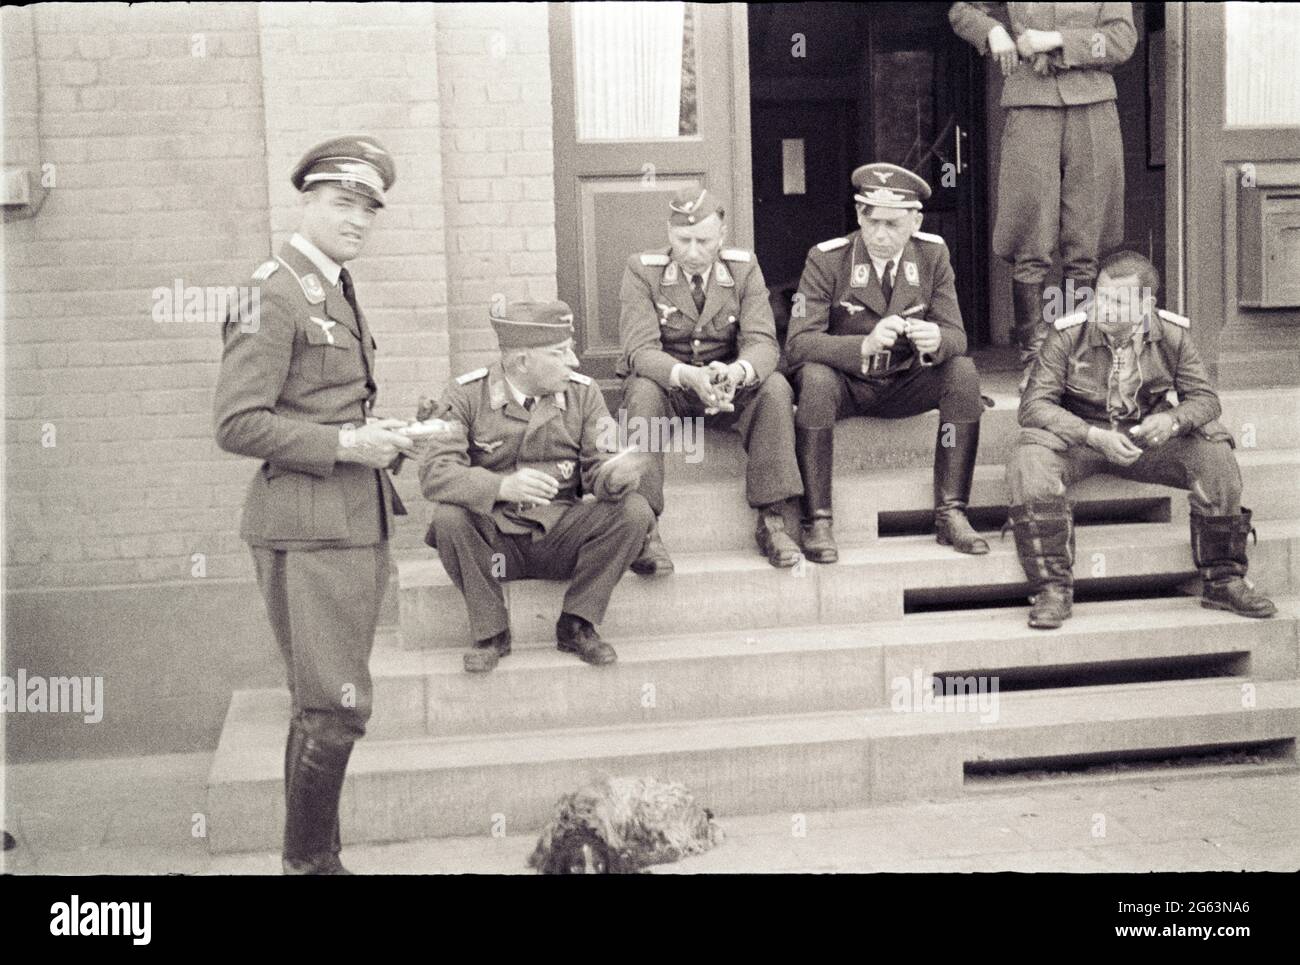 Luftwaffe Stock Photo